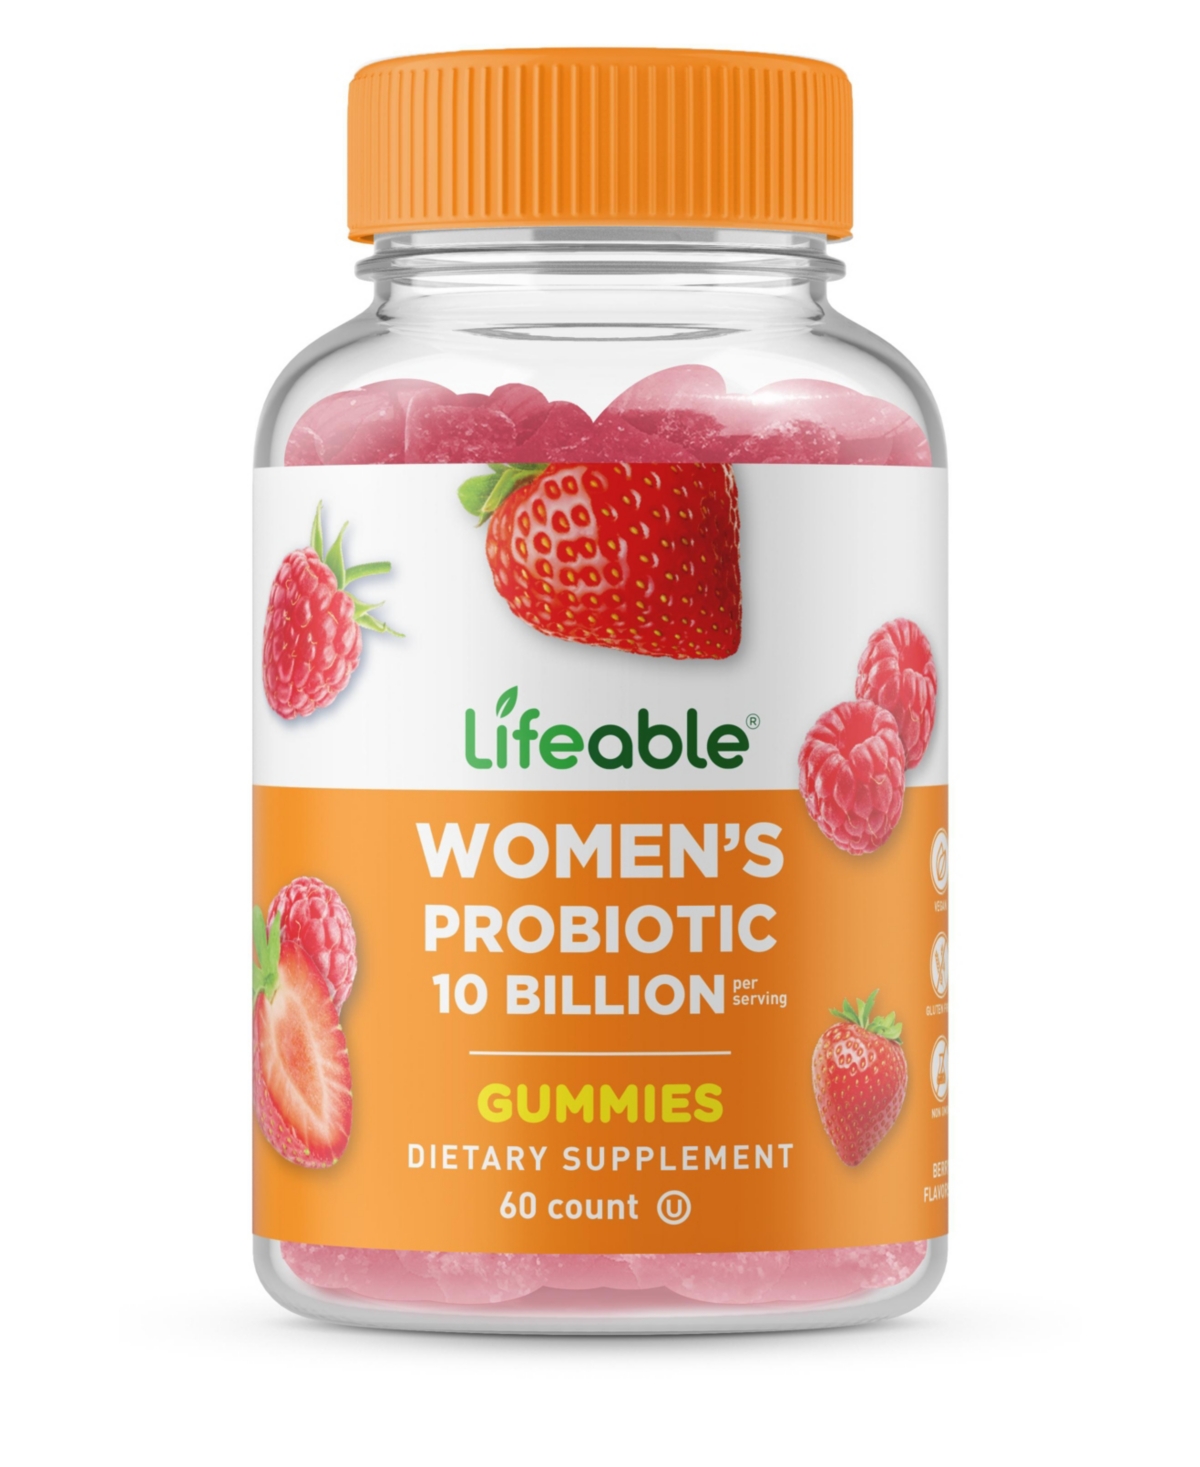 Probiotics for Women 10 Billion Cfu Gummies - Digestive And Immunity - Great Tasting Natural Flavor Dietary Supplement Vitamins - 60 Gummies